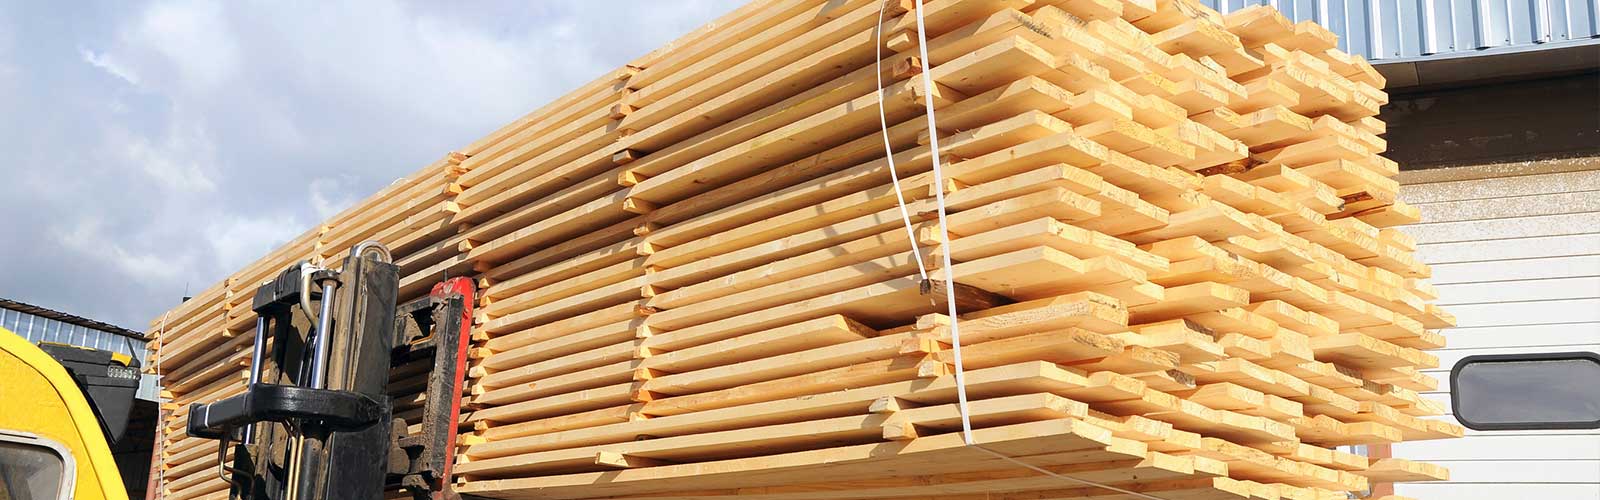 High Quality Lumber 